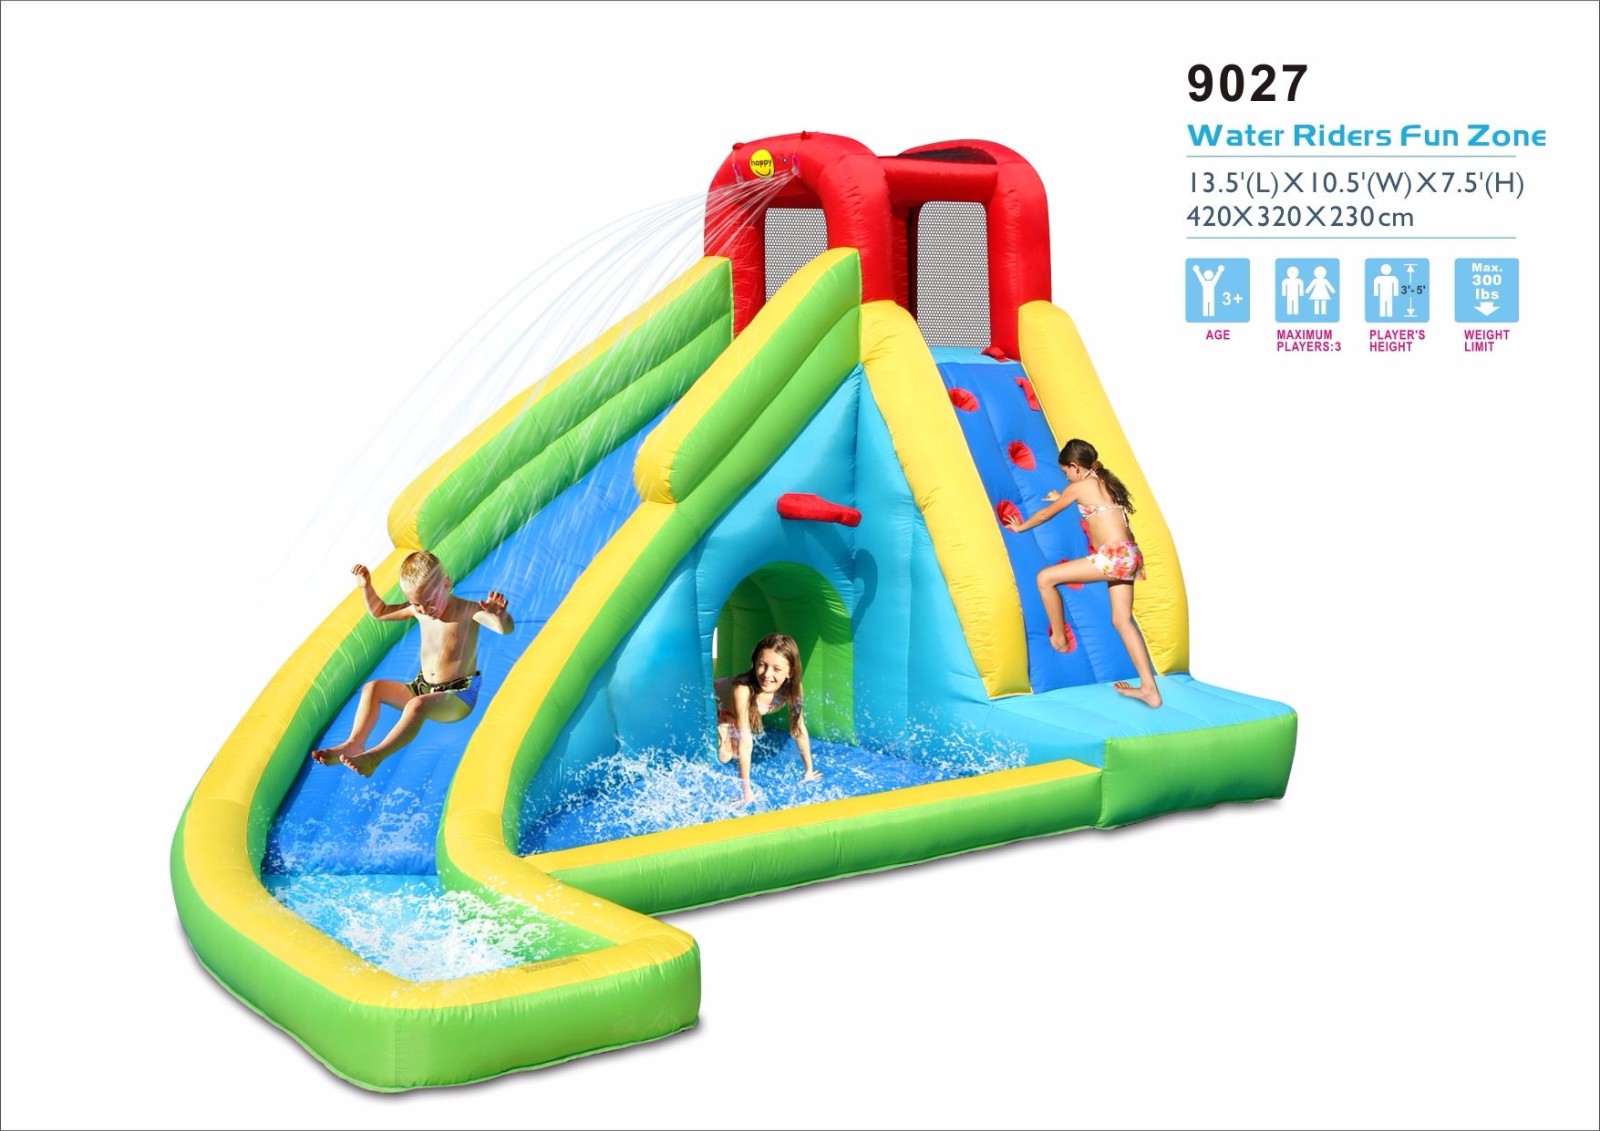 Inflatable water slide-9027 Water Riders Fun Zone